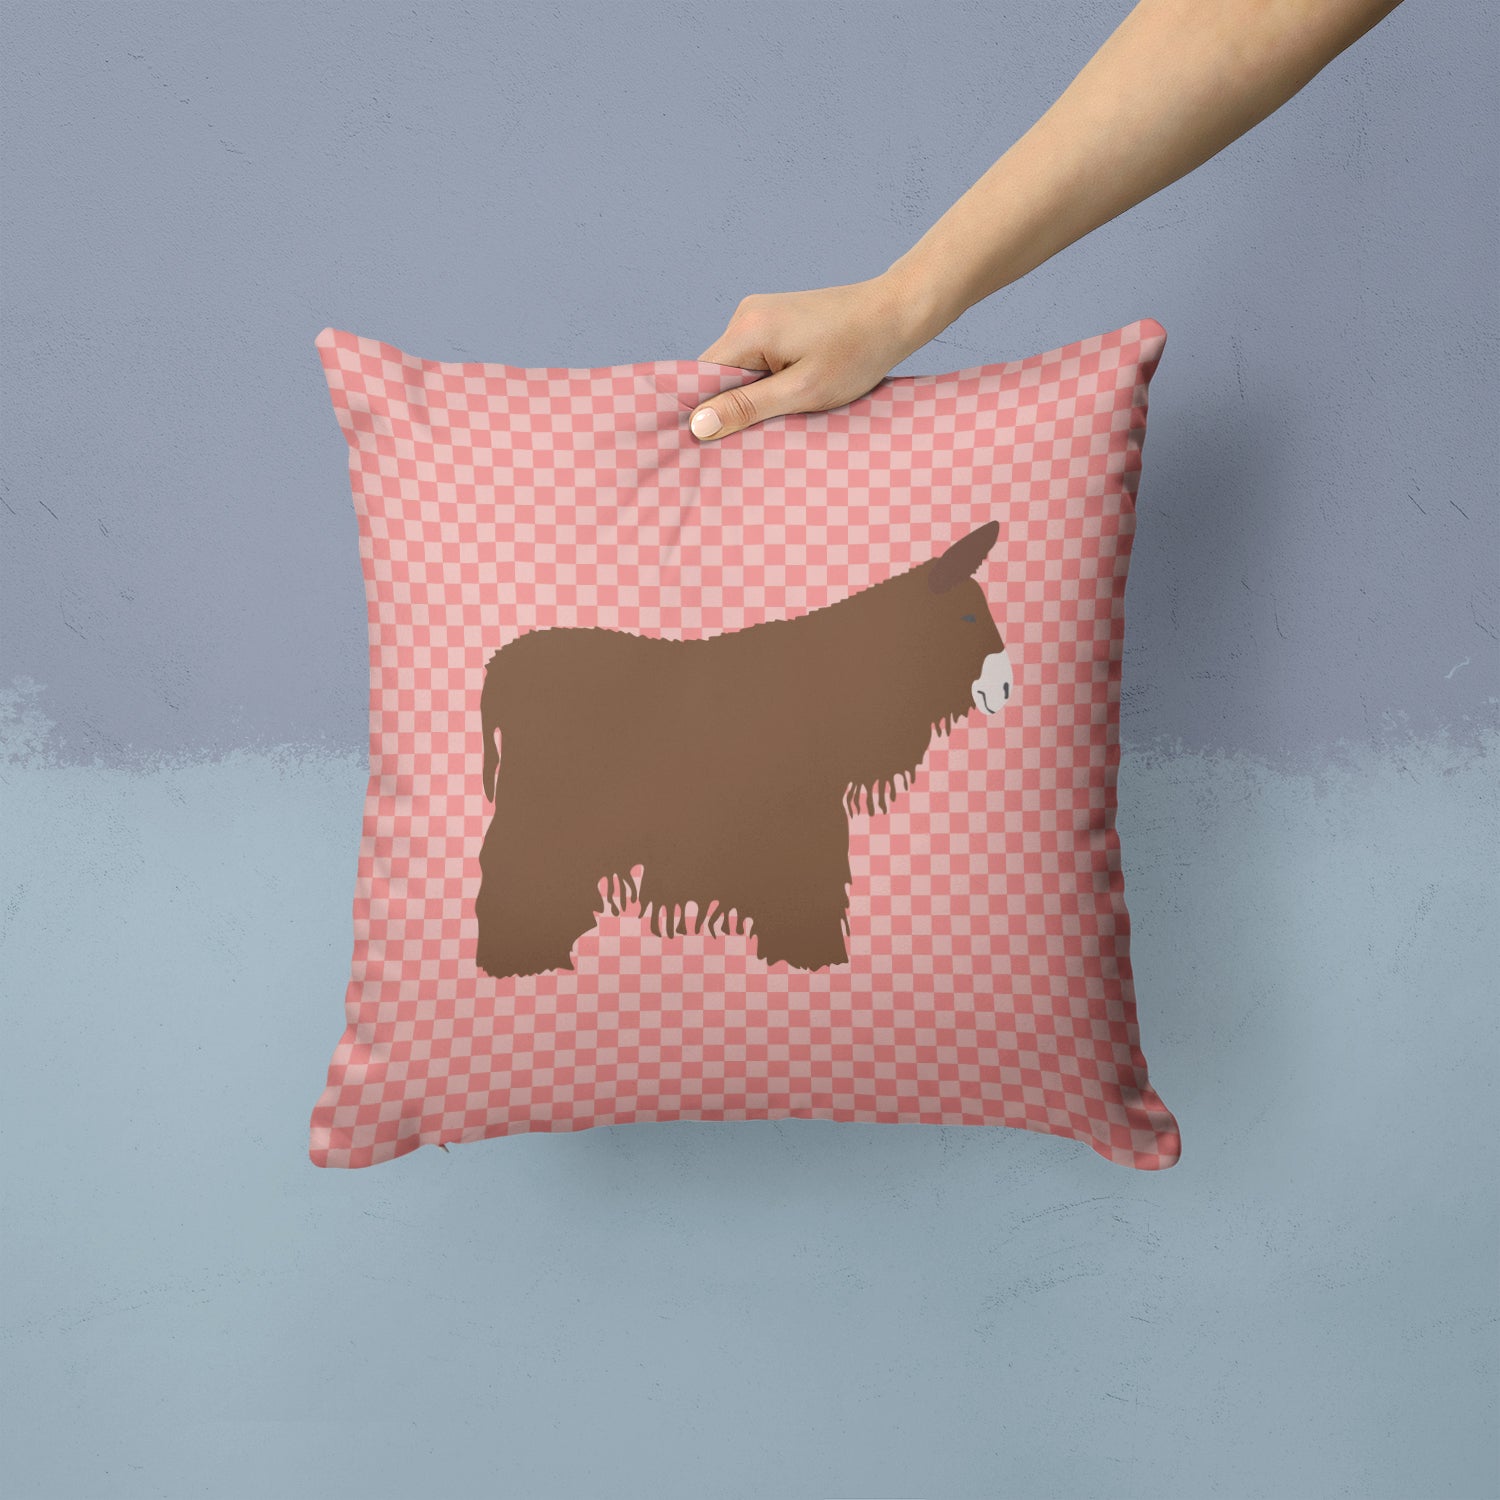 Poitou Poiteuin Donkey Pink Check Fabric Decorative Pillow BB7852PW1414 - the-store.com